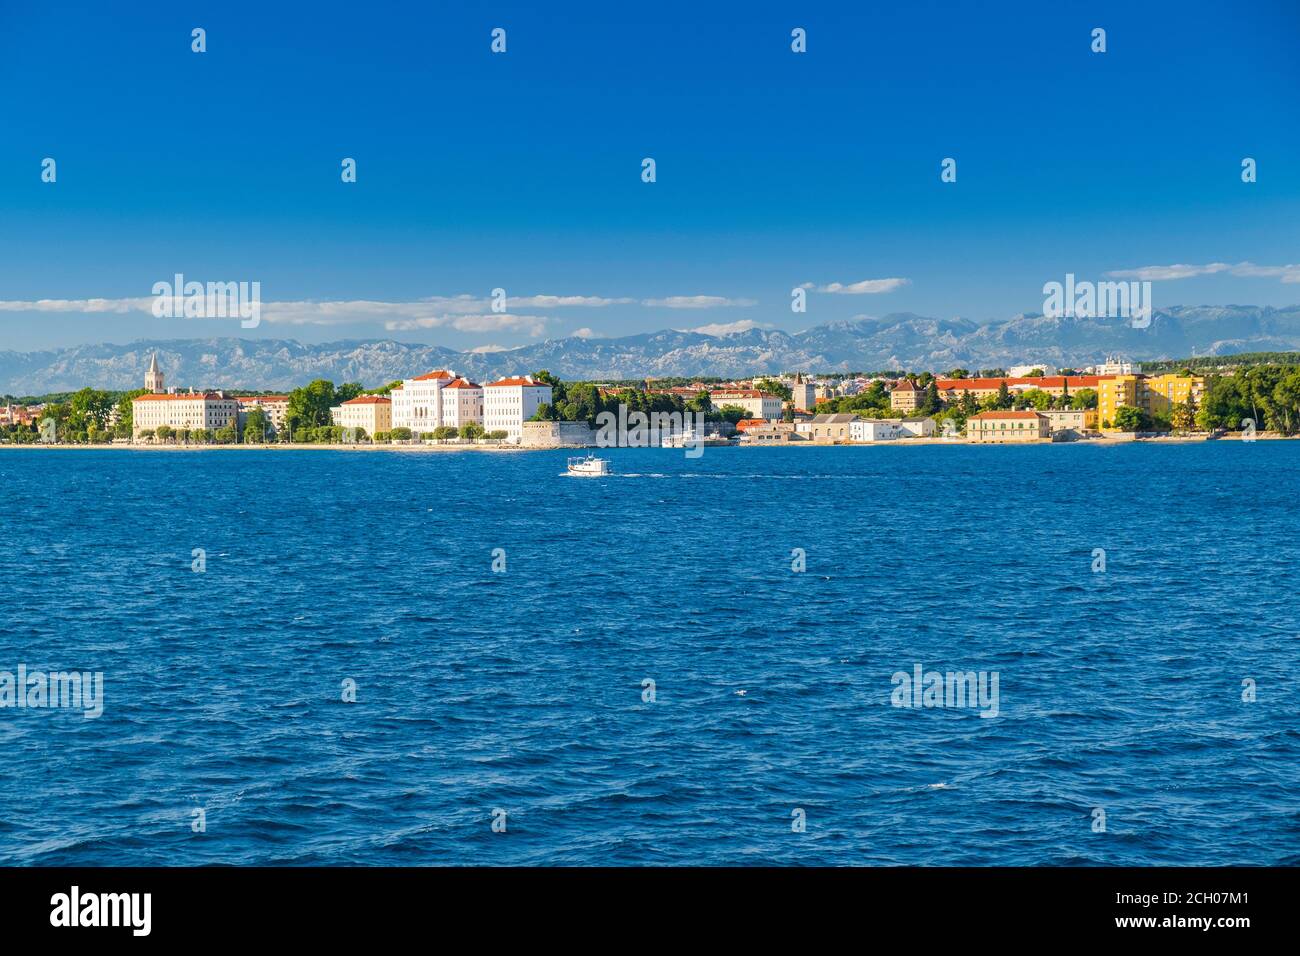 Croatia, city of Zadar, cityscape frome the seaside. Zadar is famous tourist destination at Adriatic sea coast. Stock Photo